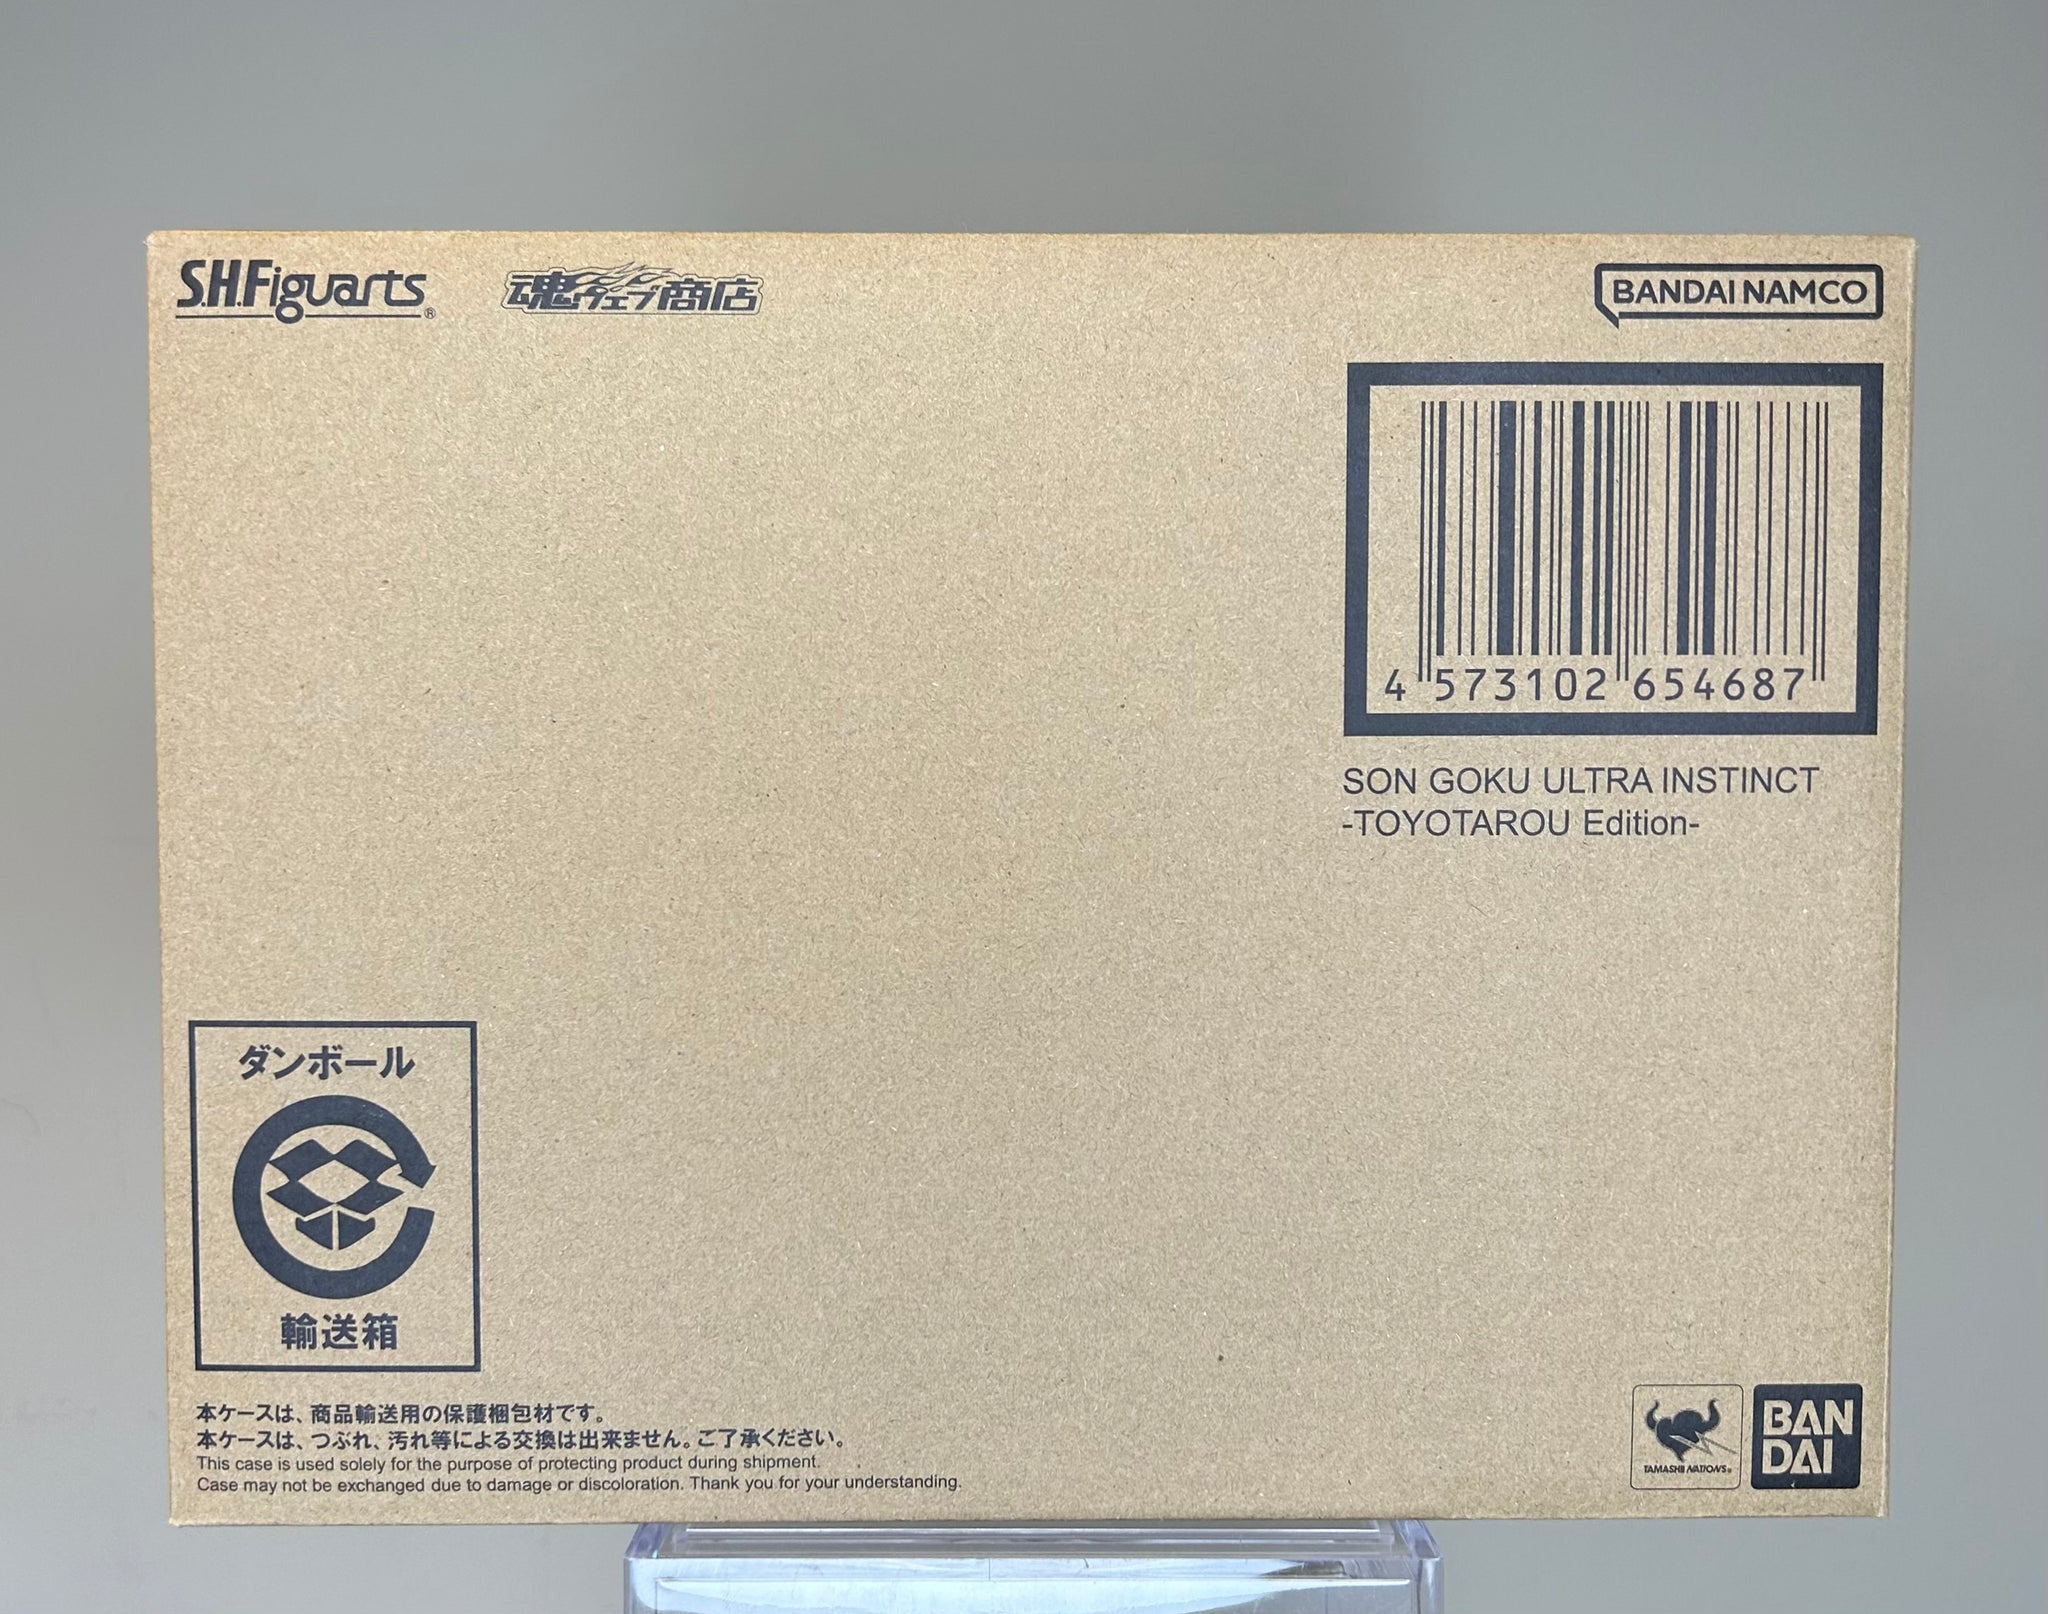 Dragon Ball Super S.H.Figuarts Son Goku Ultra Instinct Toyotarou Edition P-Bandai Exclusive